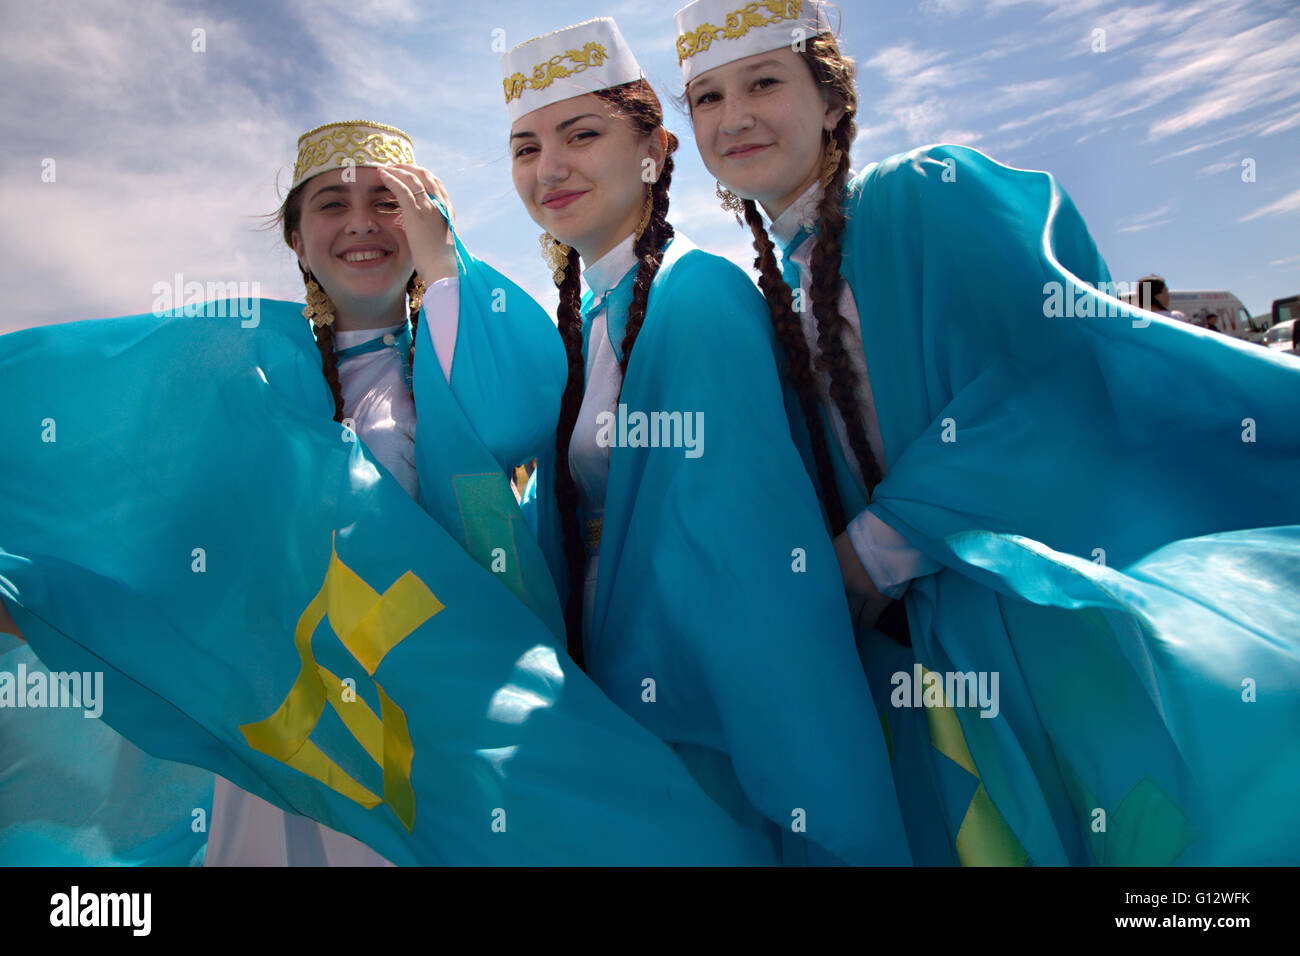 Celebrations of Hidirellez, the Crimean Tatar holiday of spring, near the city of Bakhchysaray in Crimea Republic Stock Photo